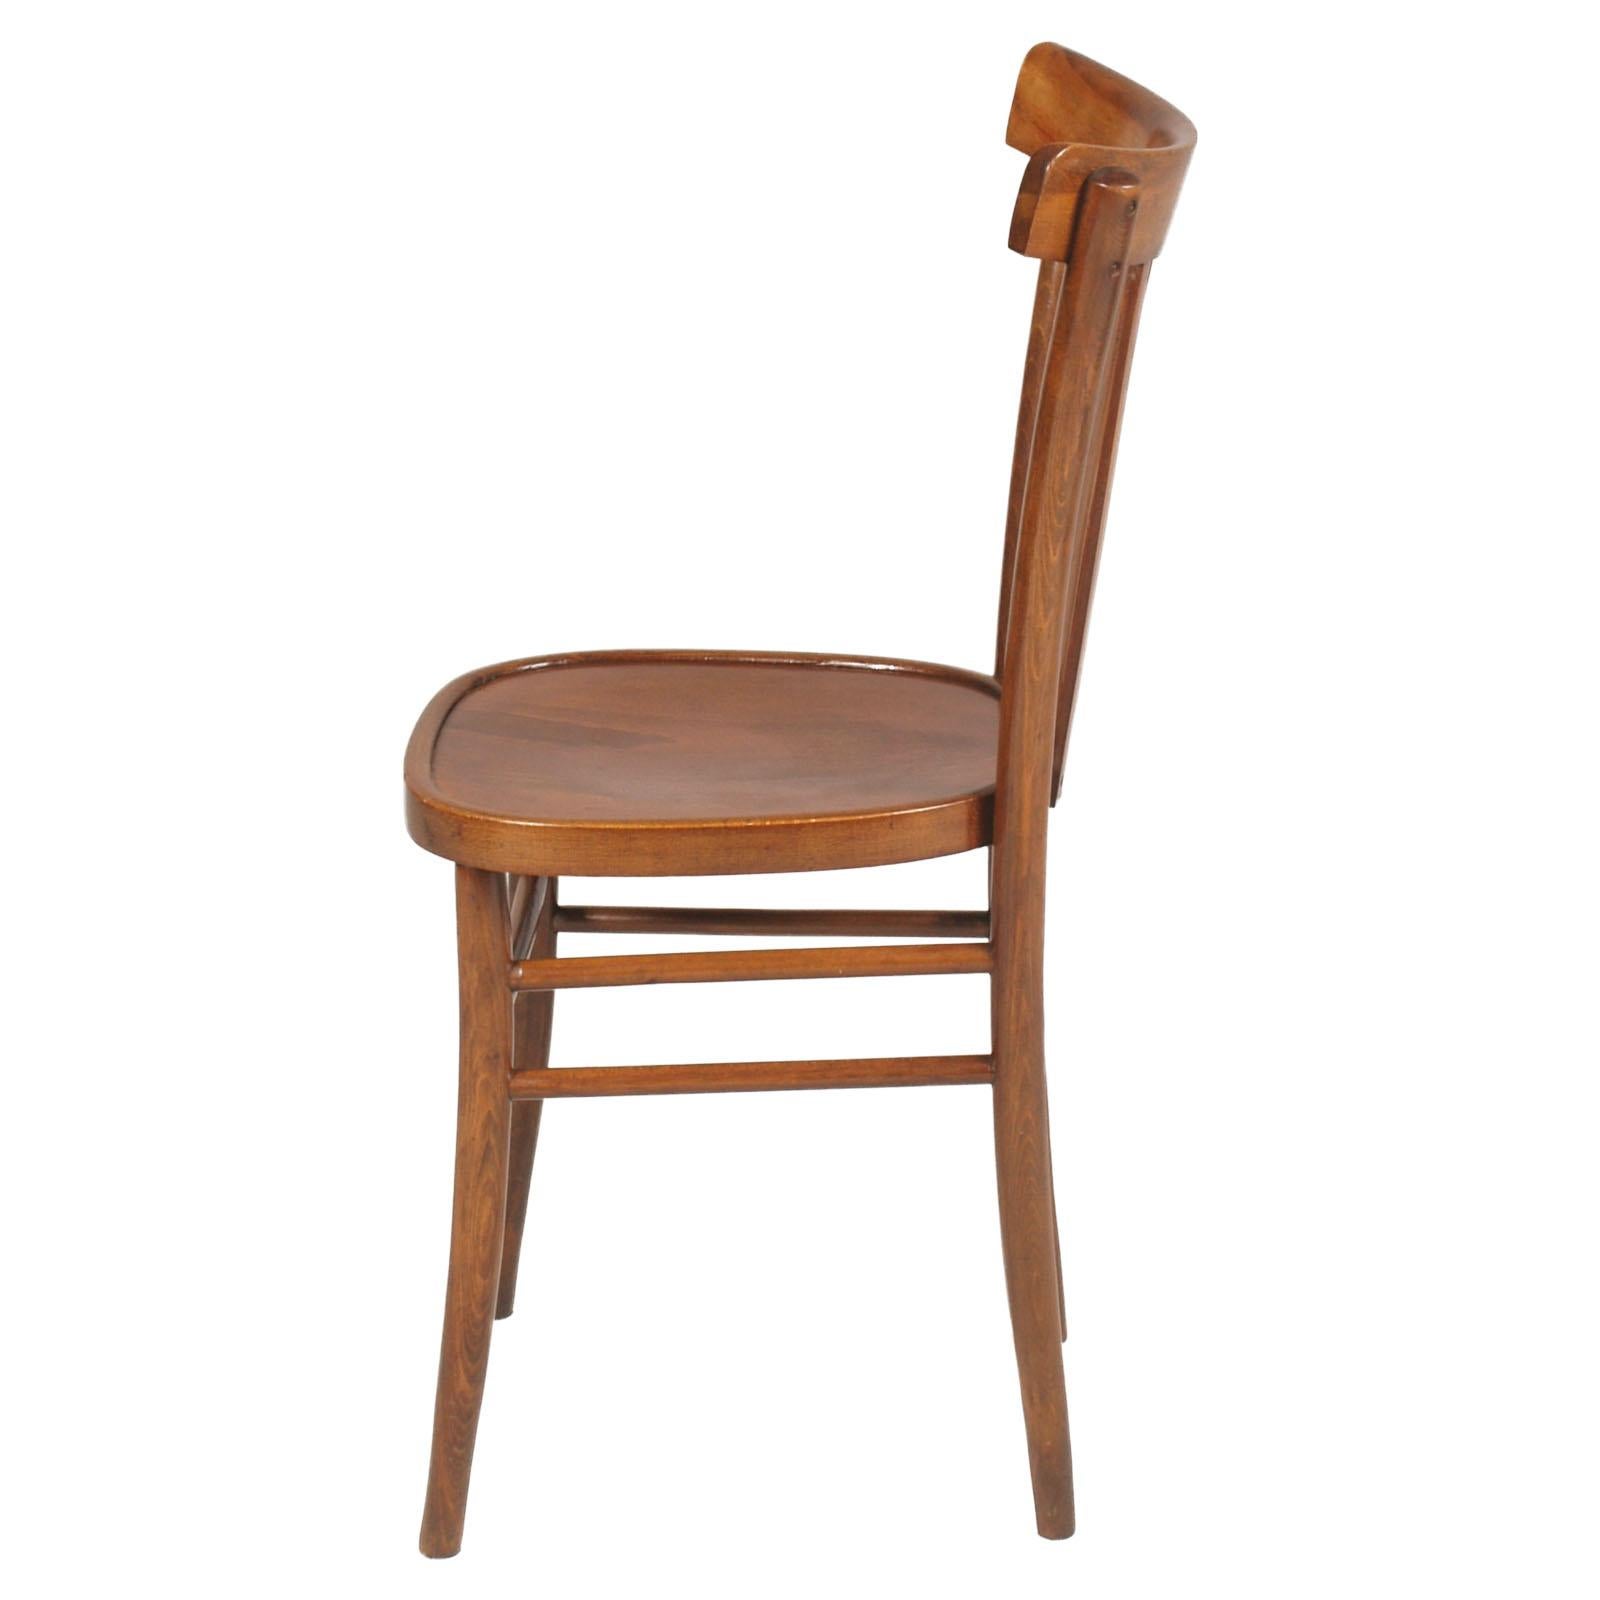 20th Century Italian Mid-Century Modern Kitchen Chair in Walnut Restored and Wax Polished